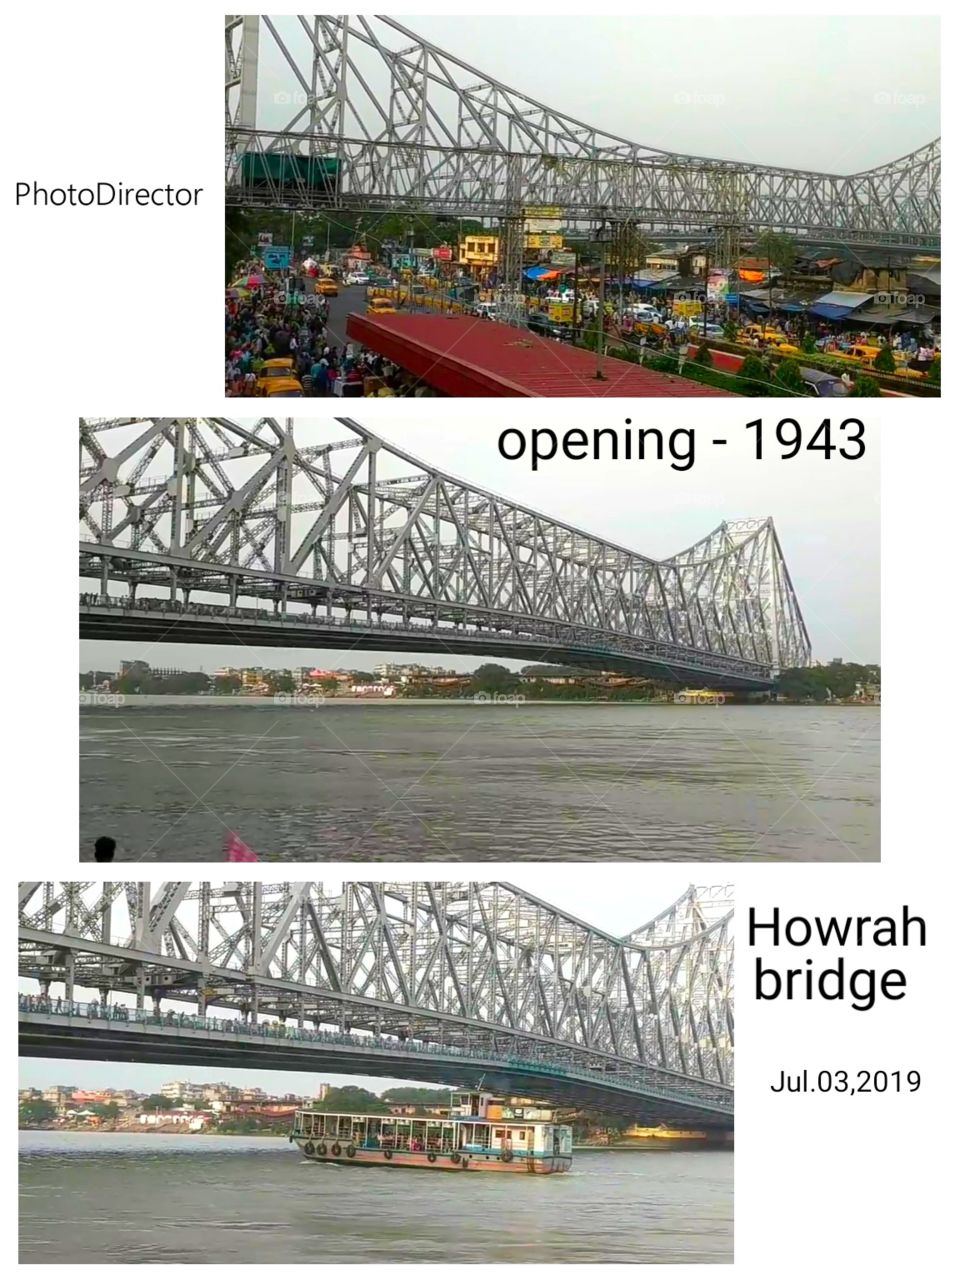 Howrah bridge